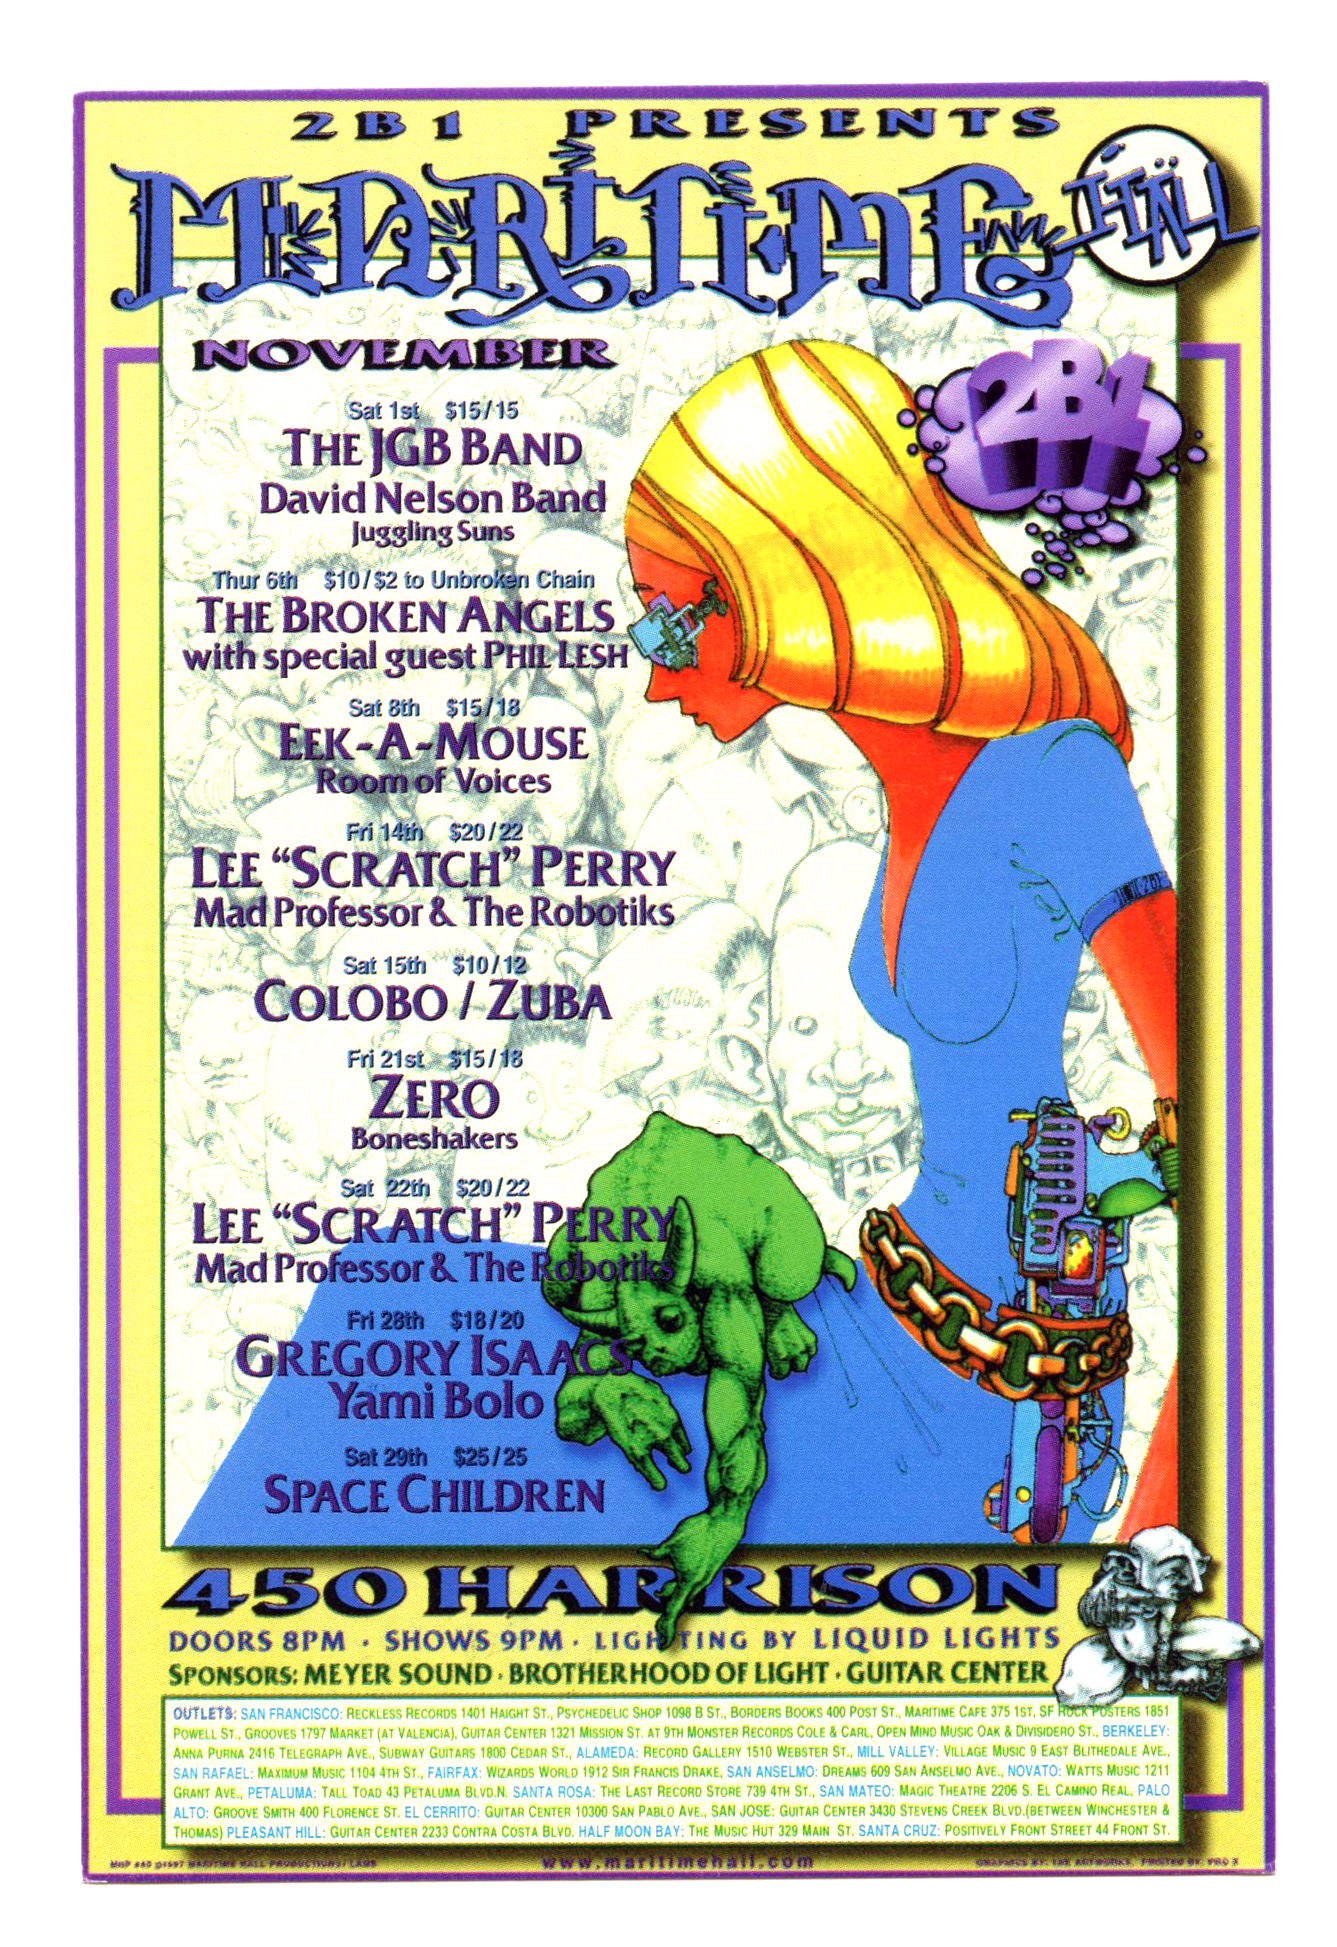 Maritime Hall 1997 Dec Handbill The JGB Band The Broken Angels